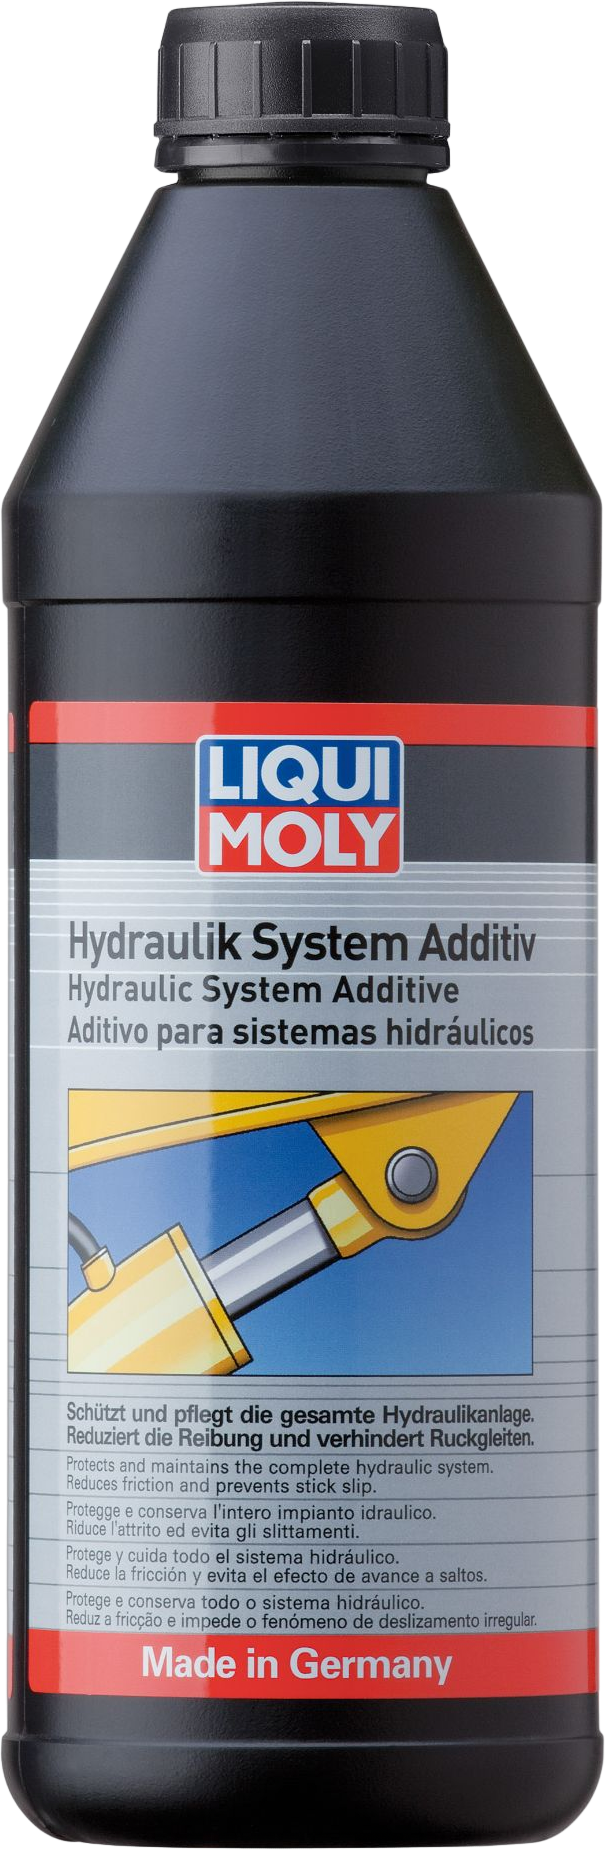 Liqui Moly Additief voor Hydraulieksysteem, 6 x 1 lt detail 2